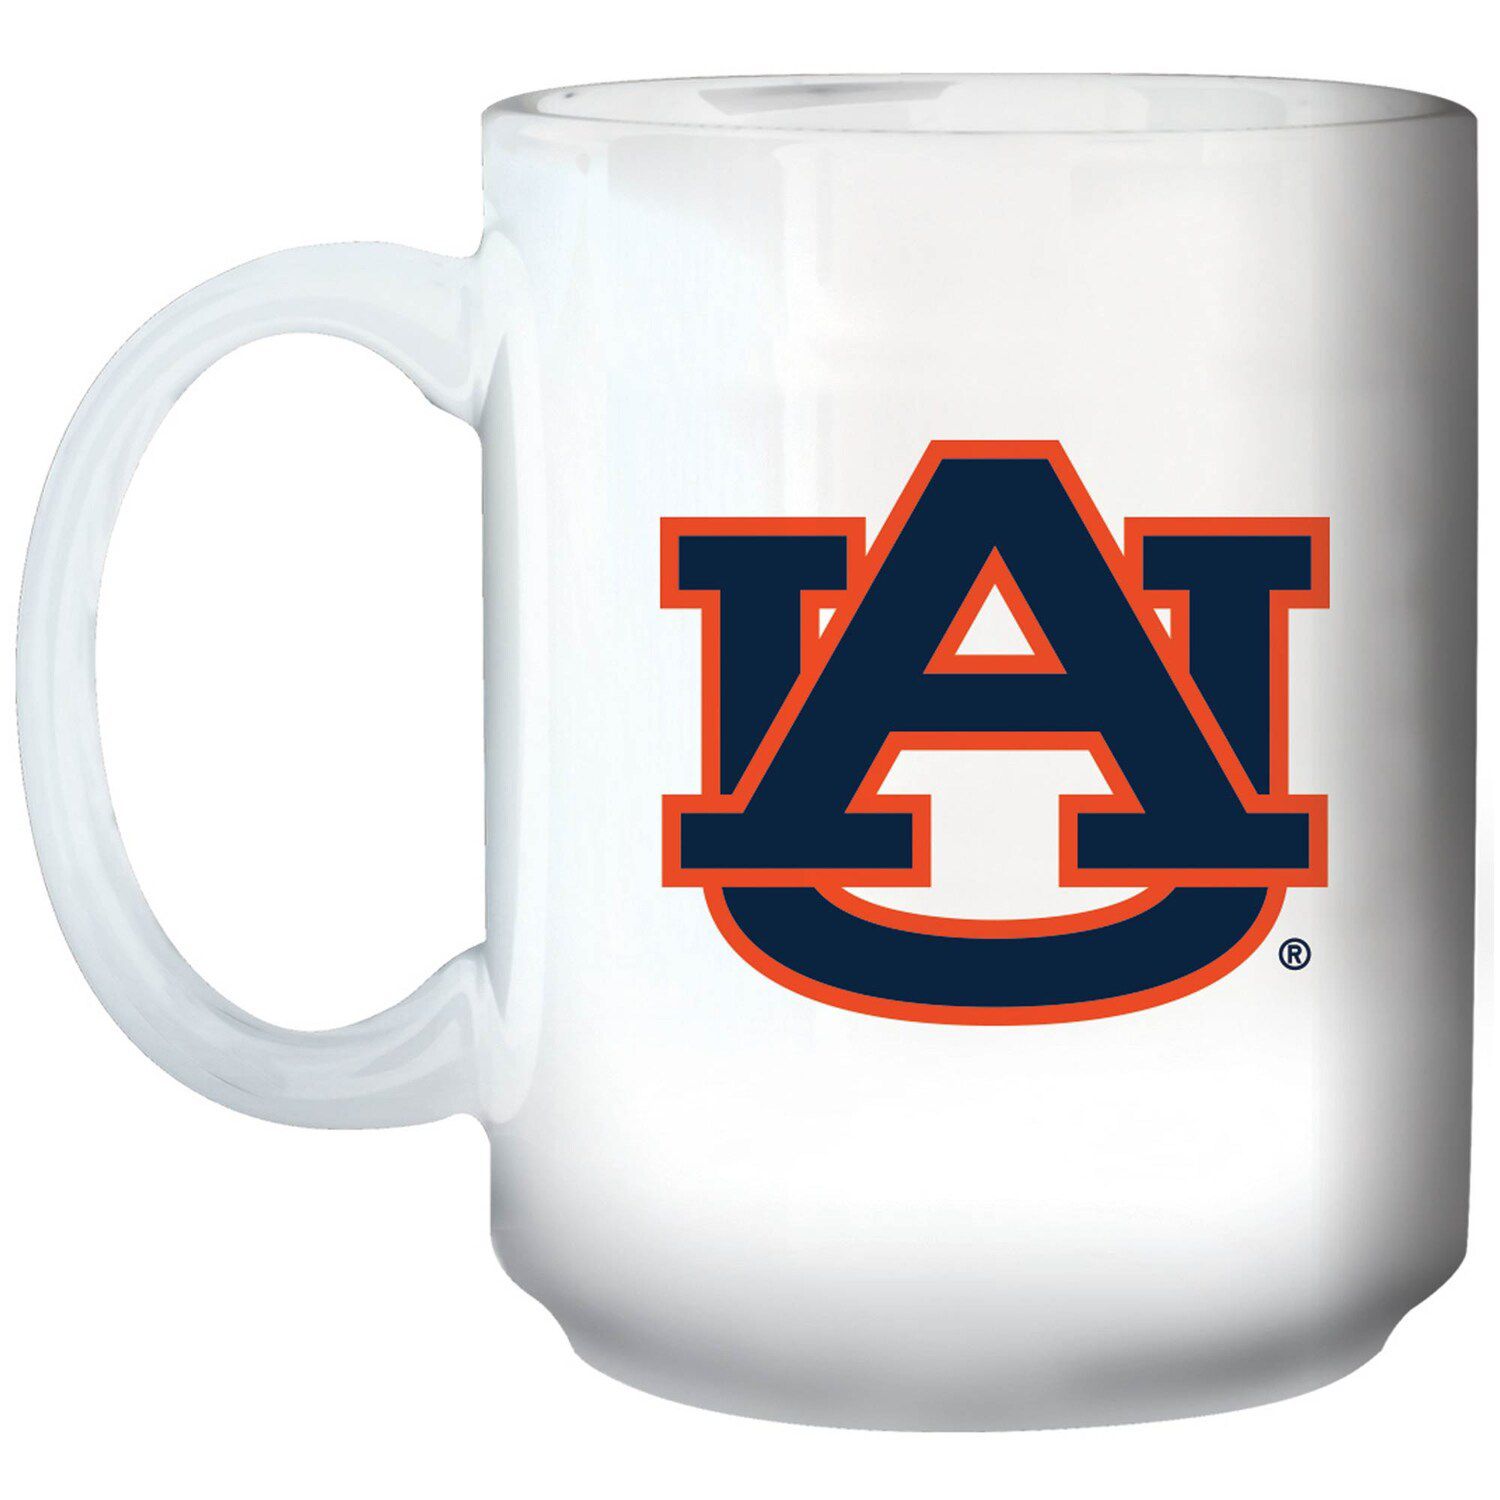 Image for Unbranded Auburn Tigers 15oz. Primary Logo Mug at Kohl's.